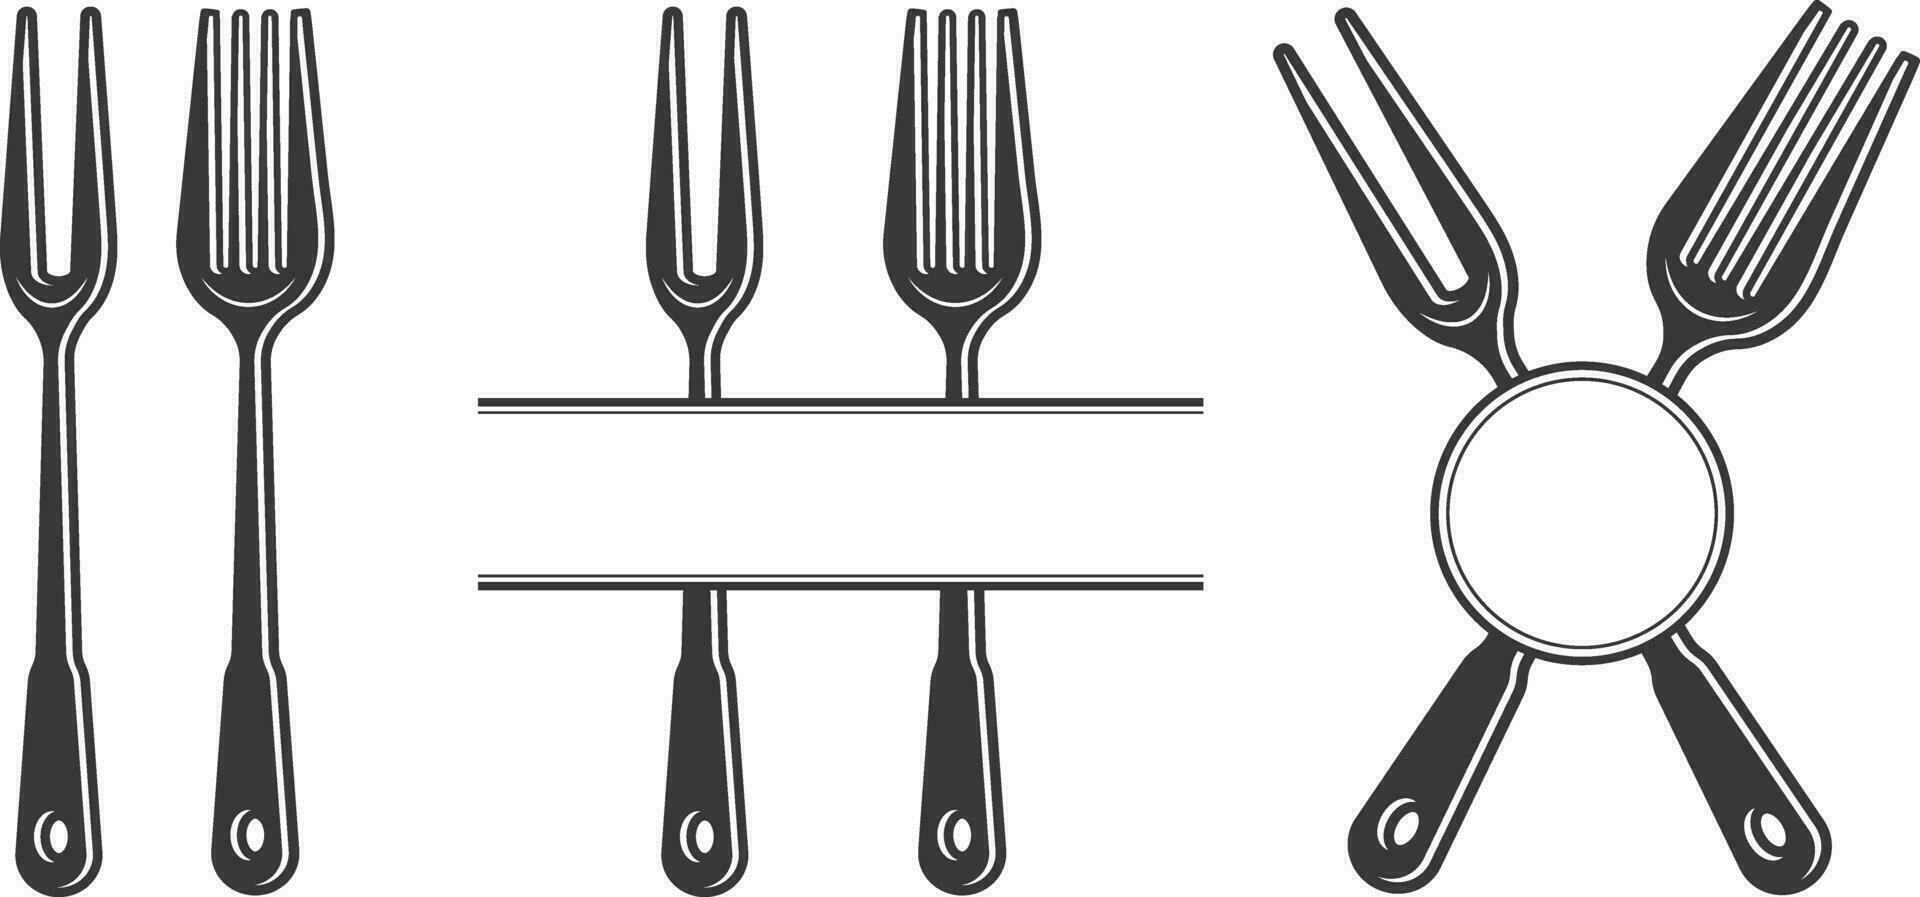 cuchillería monograma, cuchillería silueta, tenedor vector, restaurante equipo, acortar arte, tenedor cuchara y cuchillo monograma vector